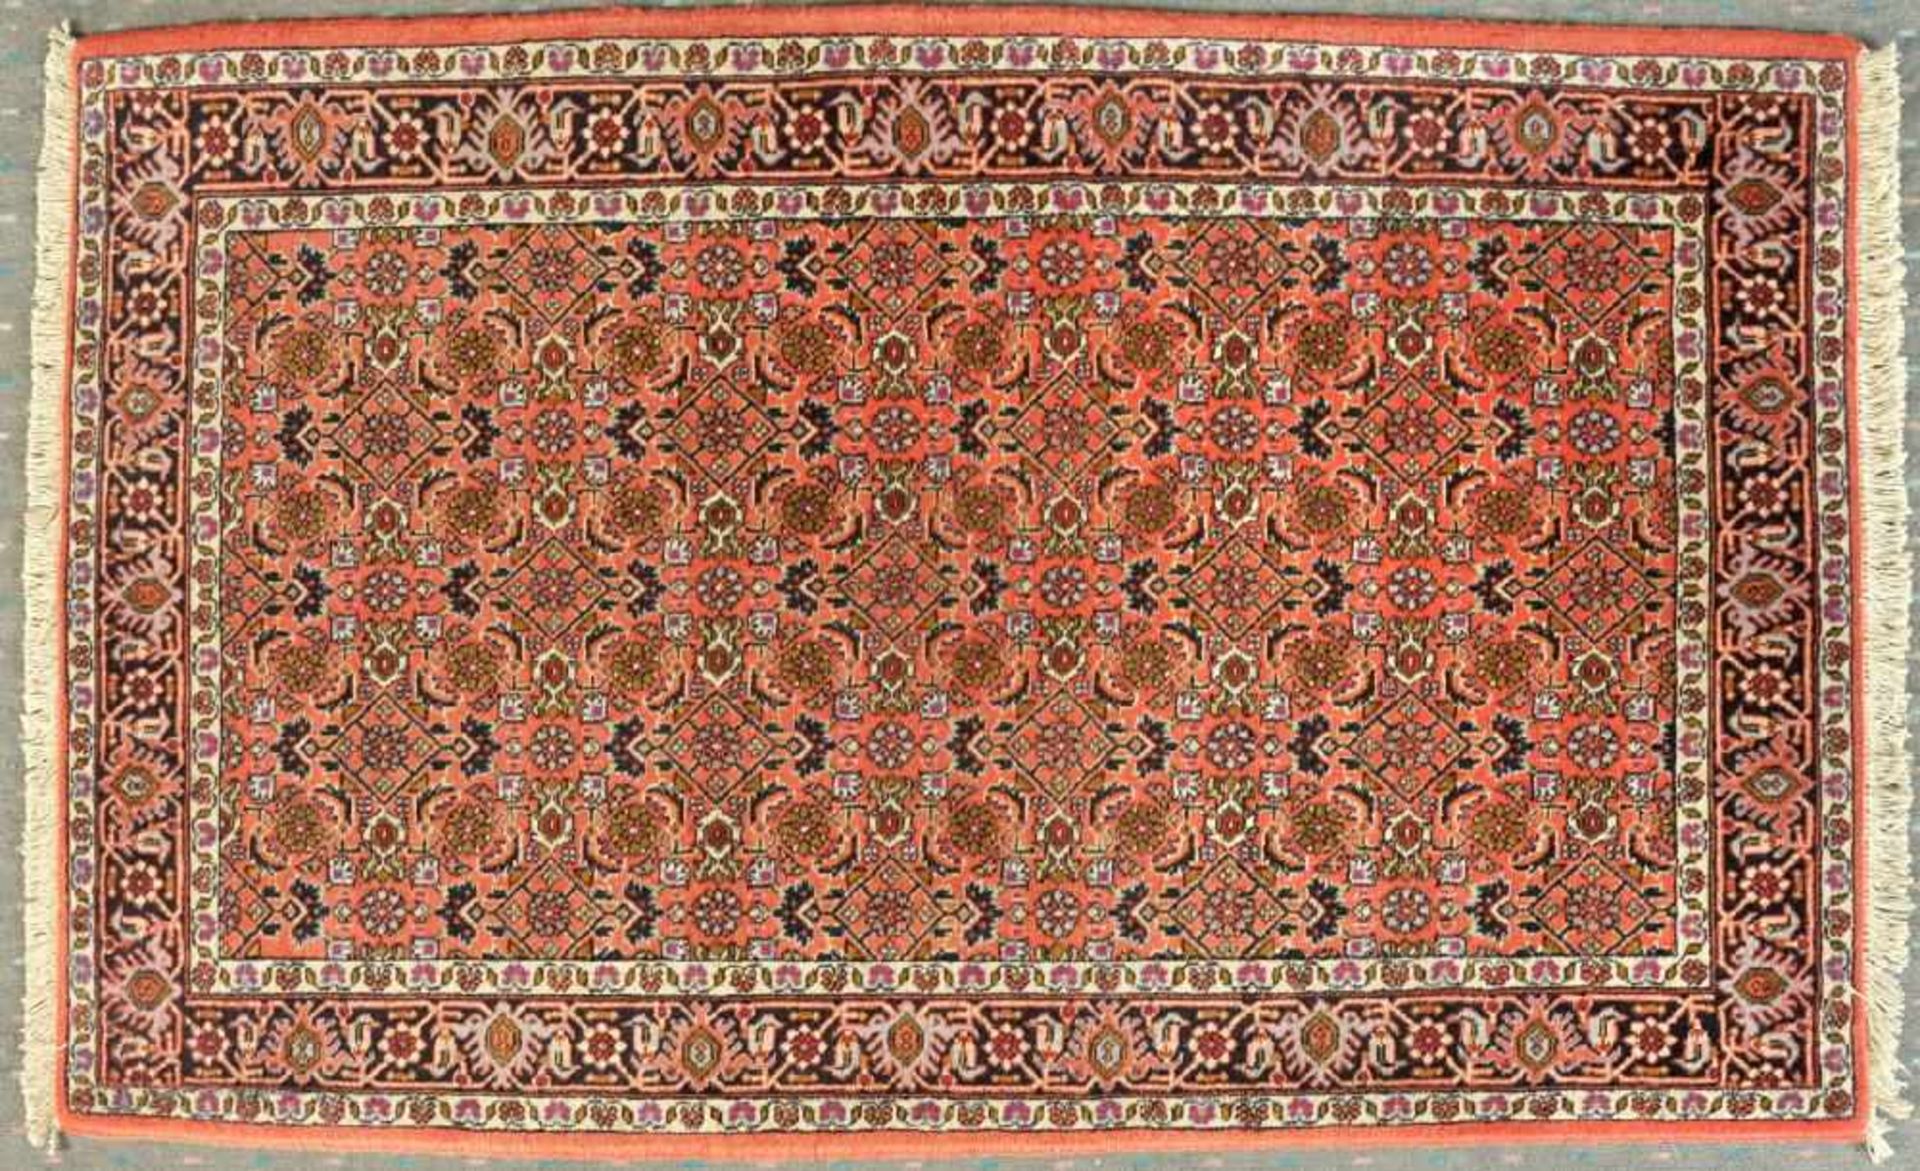 Herati-Bidjar, Persien, 85 x 136 cmälter, Wolle, feine Knüpfung, rotgrundig, durchgemustert mit